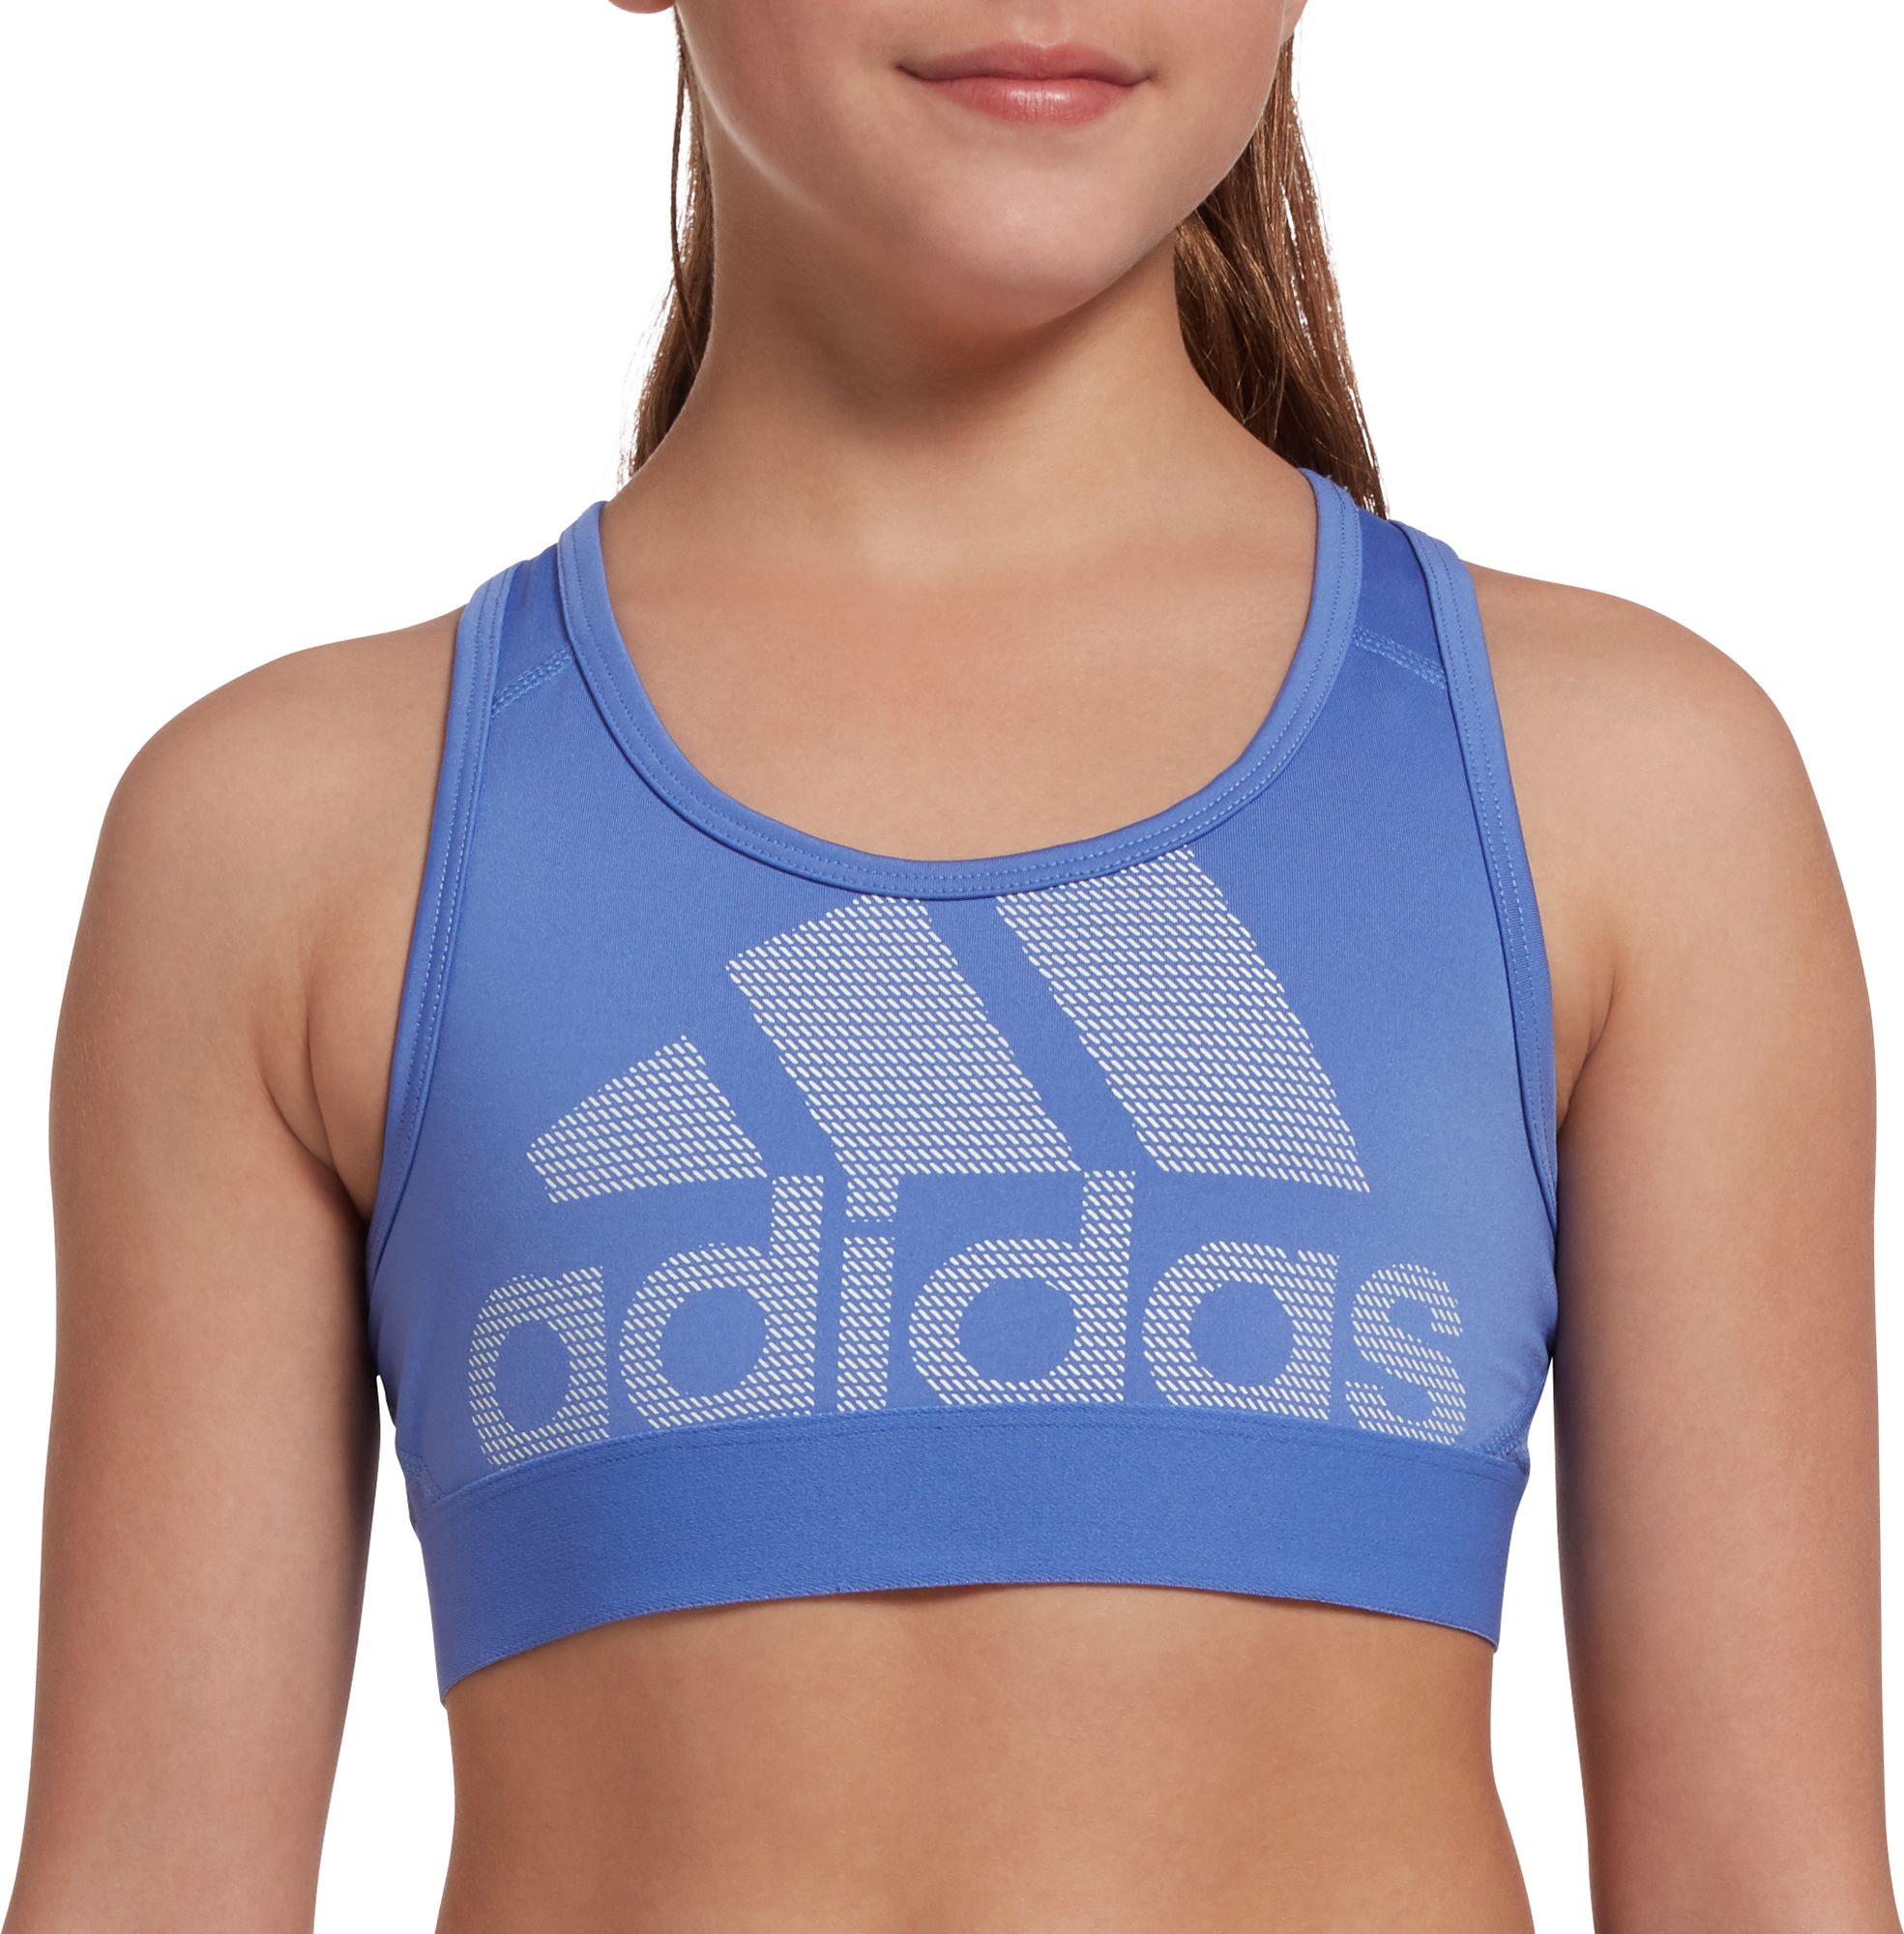 adidas girls sports bra